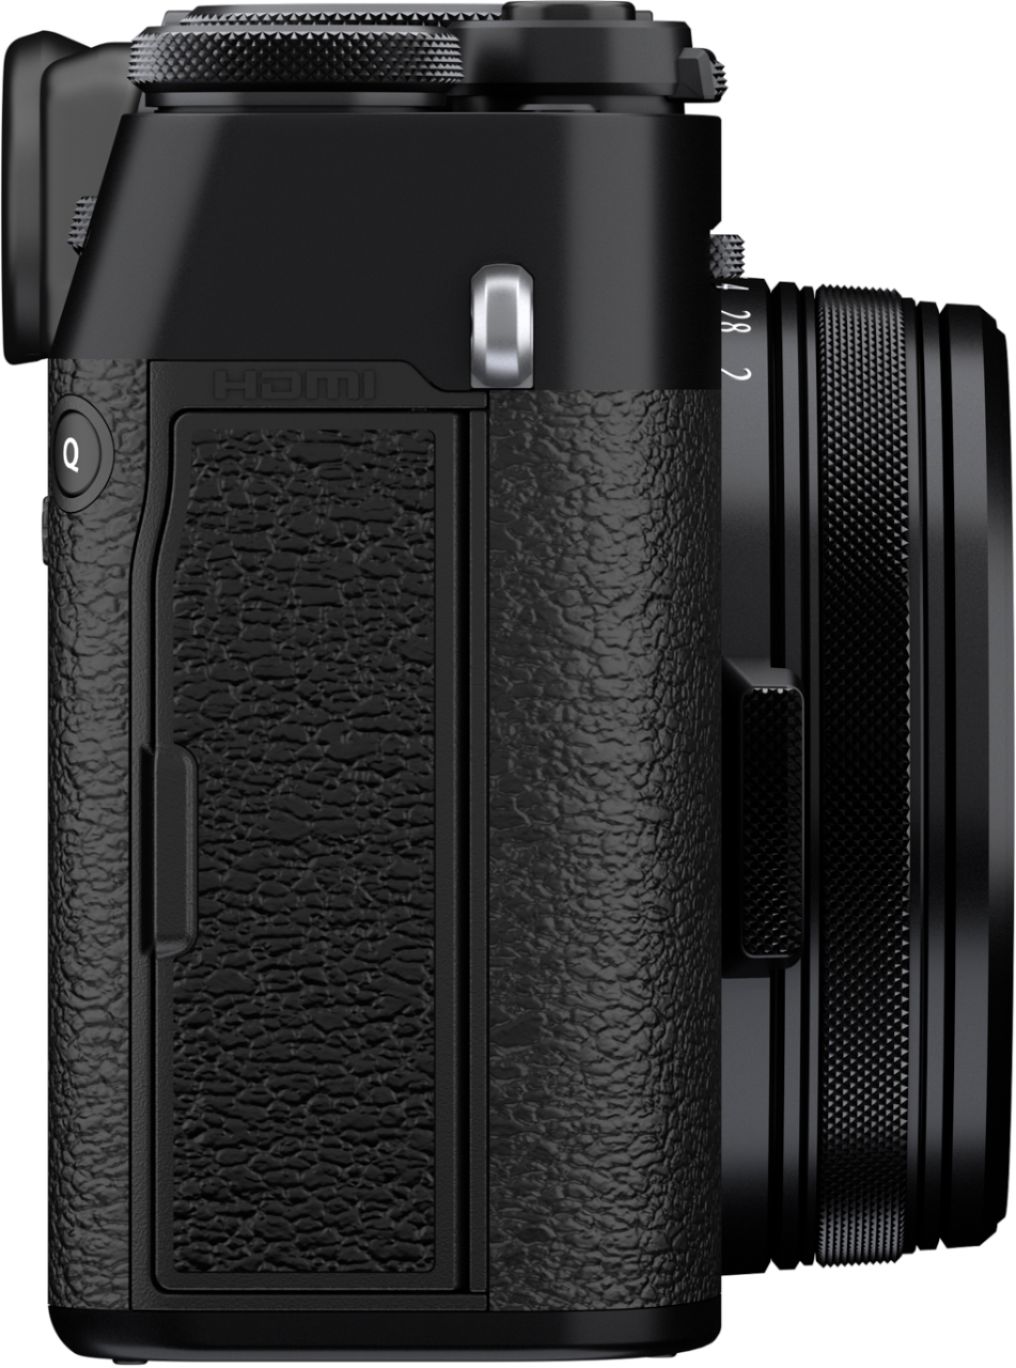 Fujifilm X Series X100V 26.1-Megapixel Digital Camera Black 